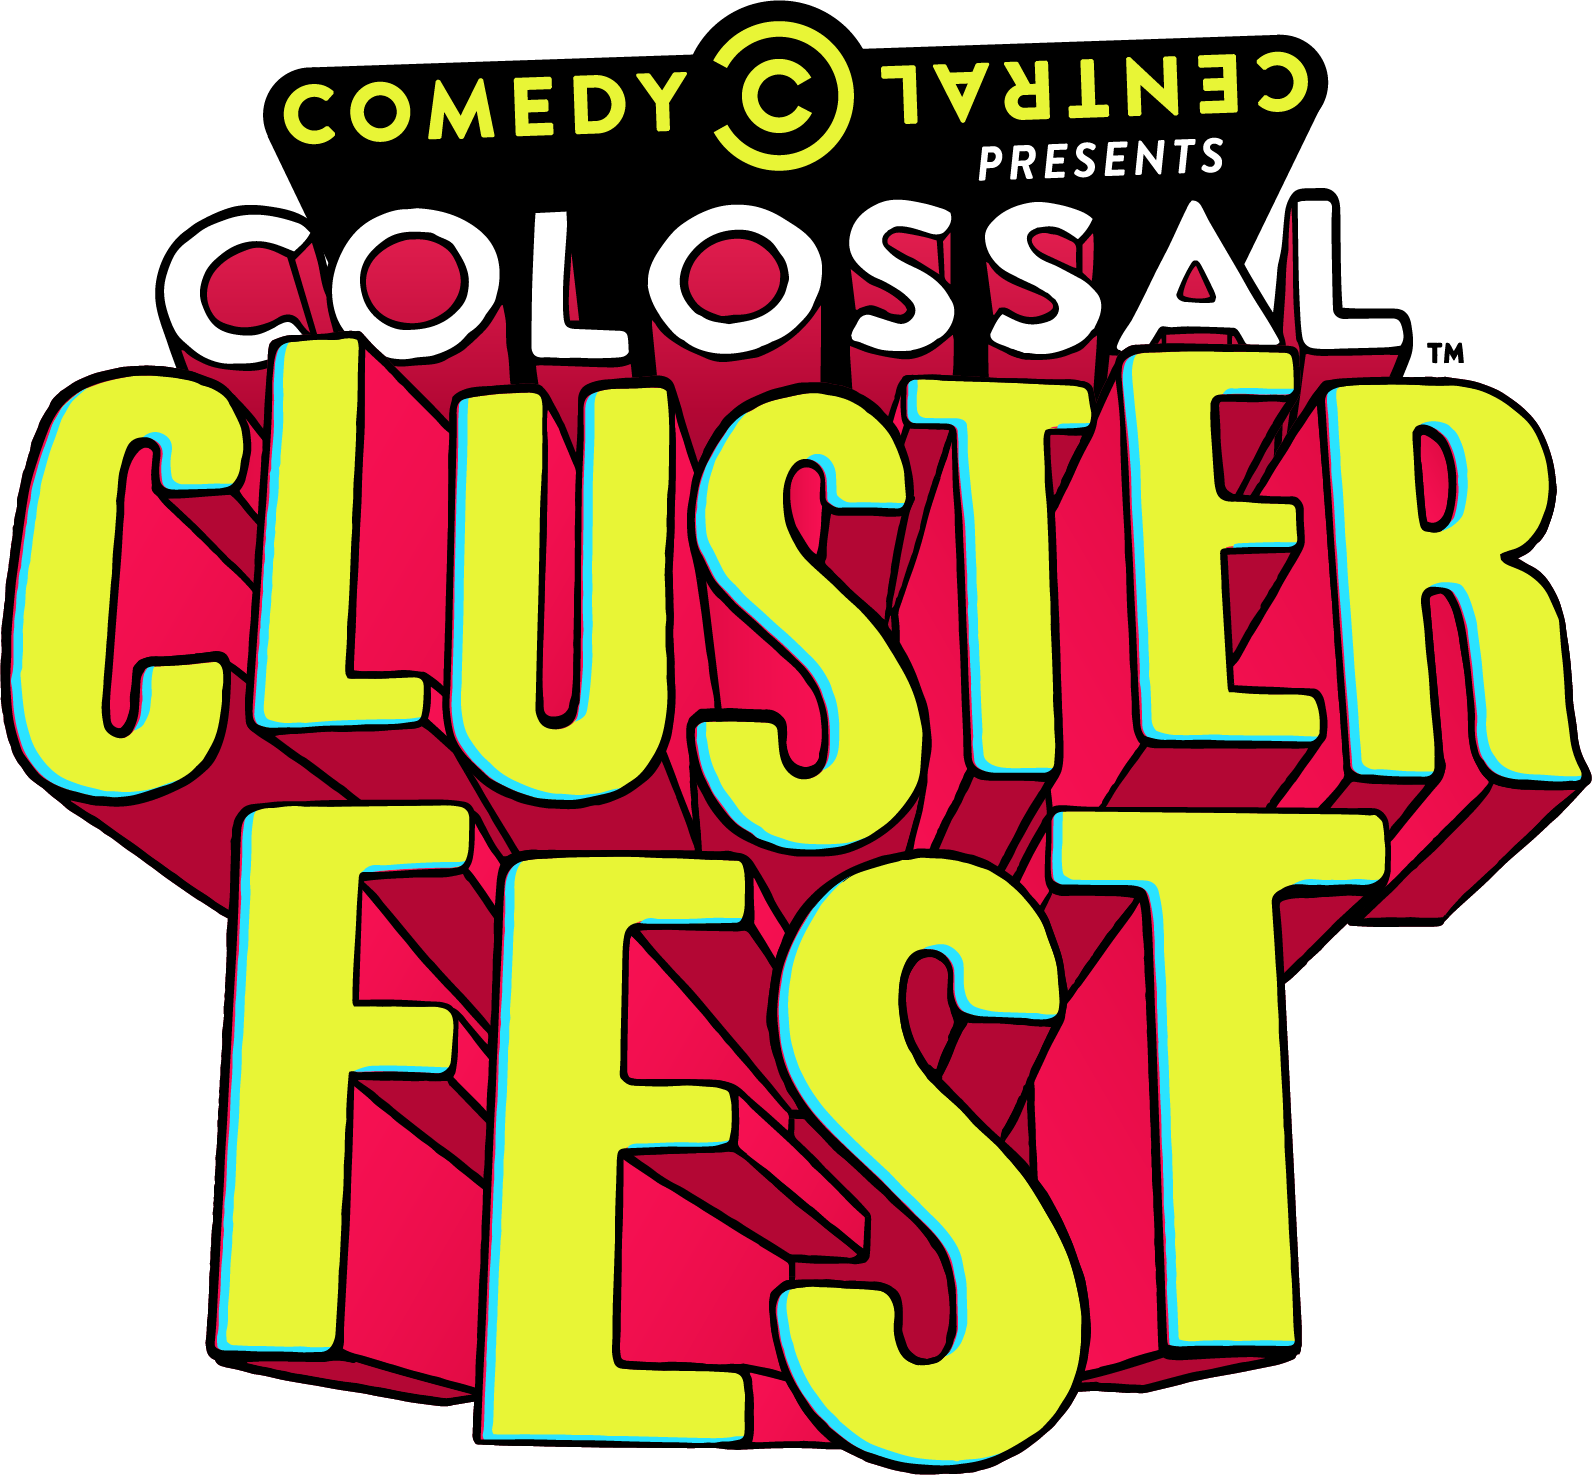 Colossal Cluster Fest Comedy Event Logo